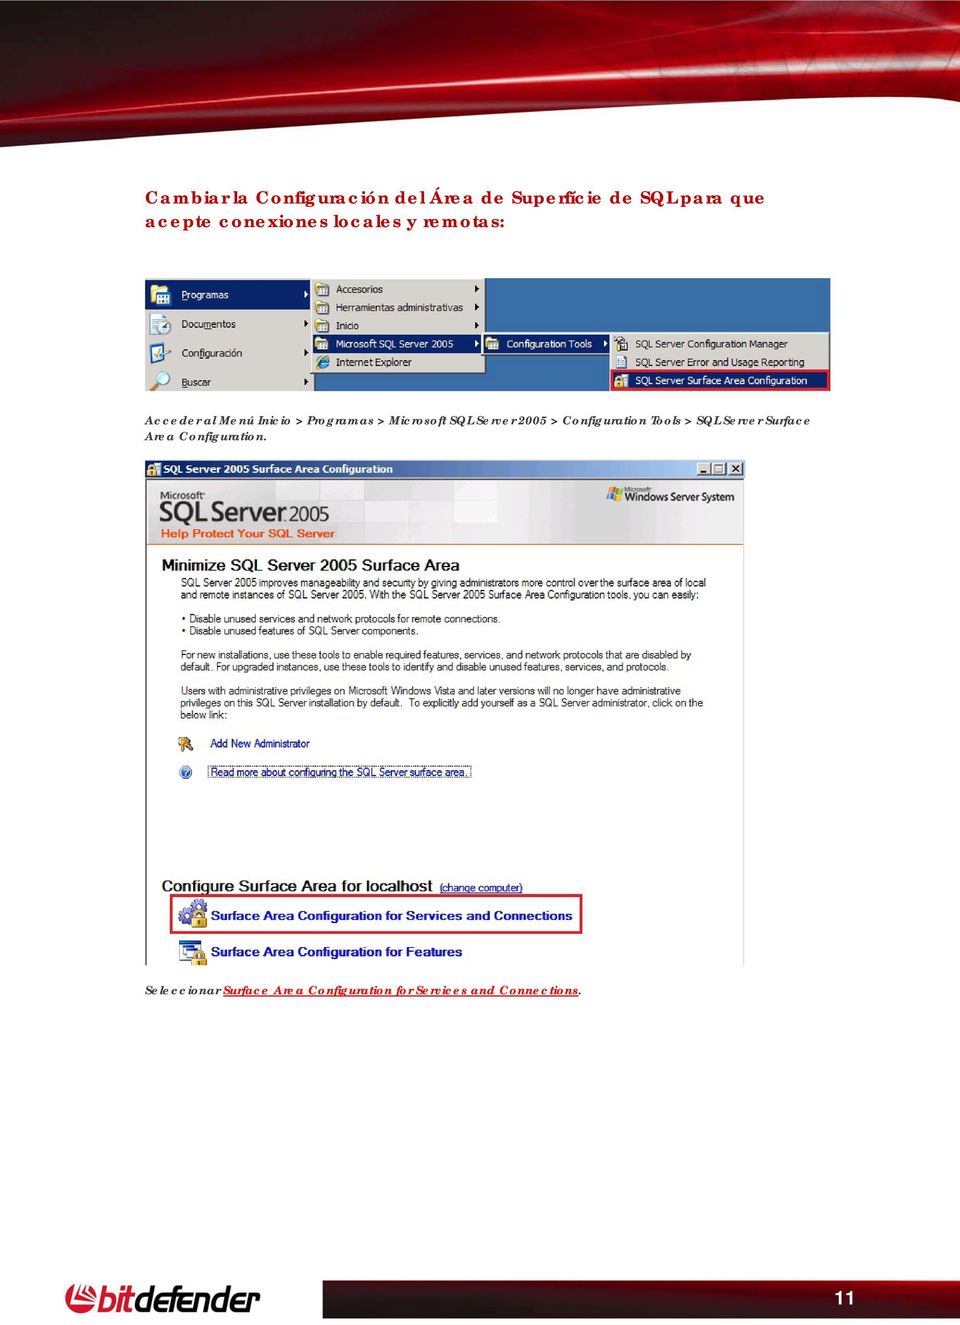 Microsoft SQL Server 2005 > Configuration Tools > SQL Server Surface Area